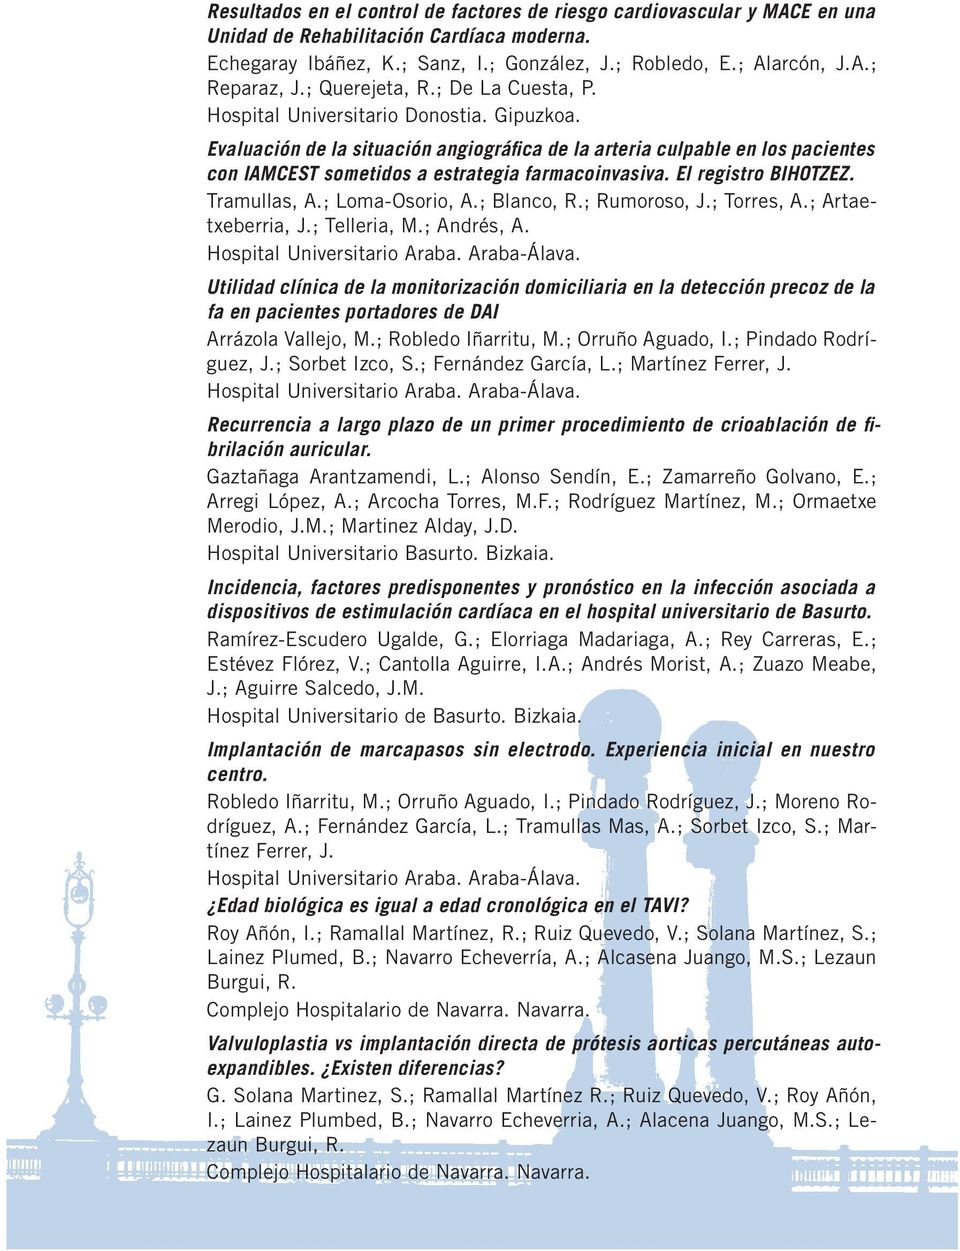 Tramullas, A.; Loma-Osorio, A.; Blanco, R.; Rumoroso, J.; Torres, A.; Artaetxeberria, J.; Telleria, M.; Andrés, A.